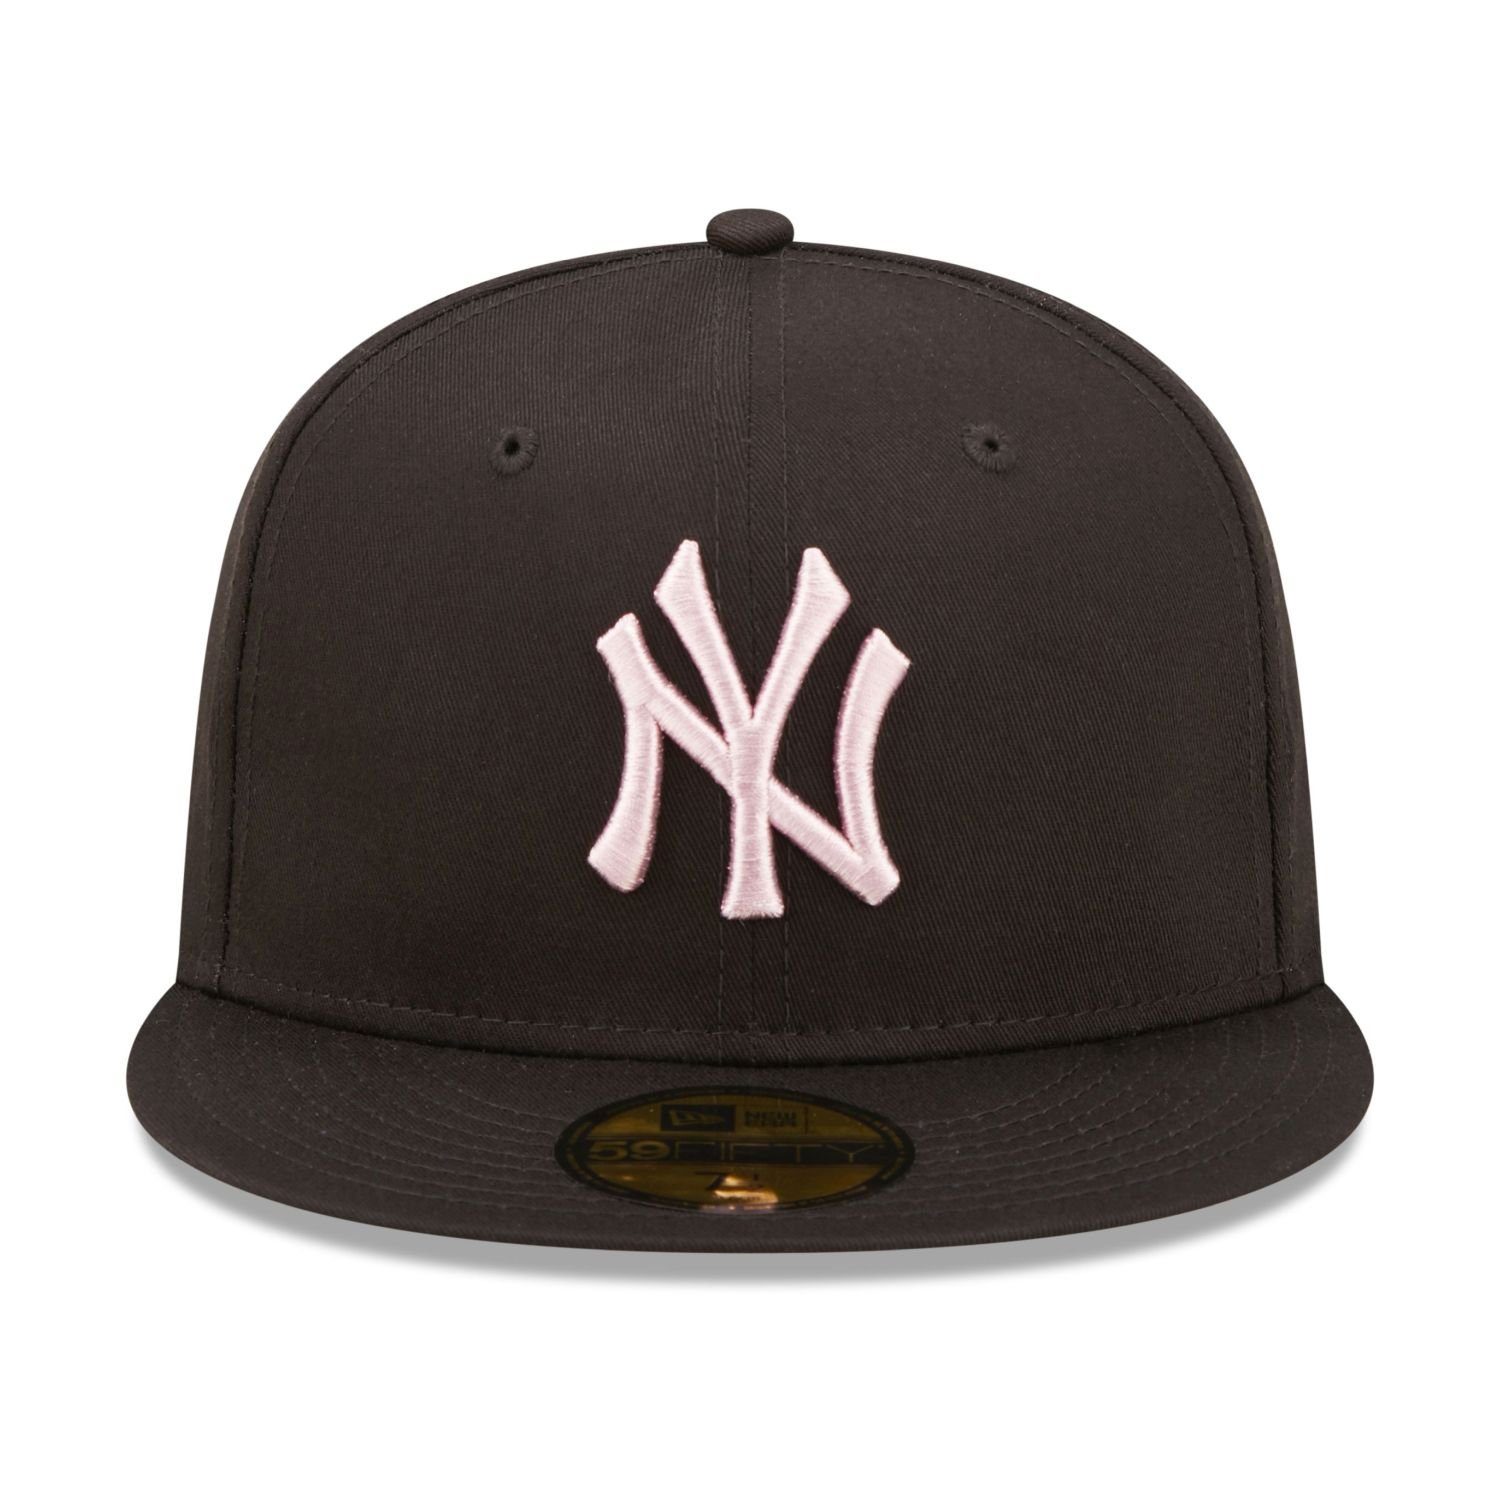 York schwarz Yankees New Fitted New Era 59Fifty Cap